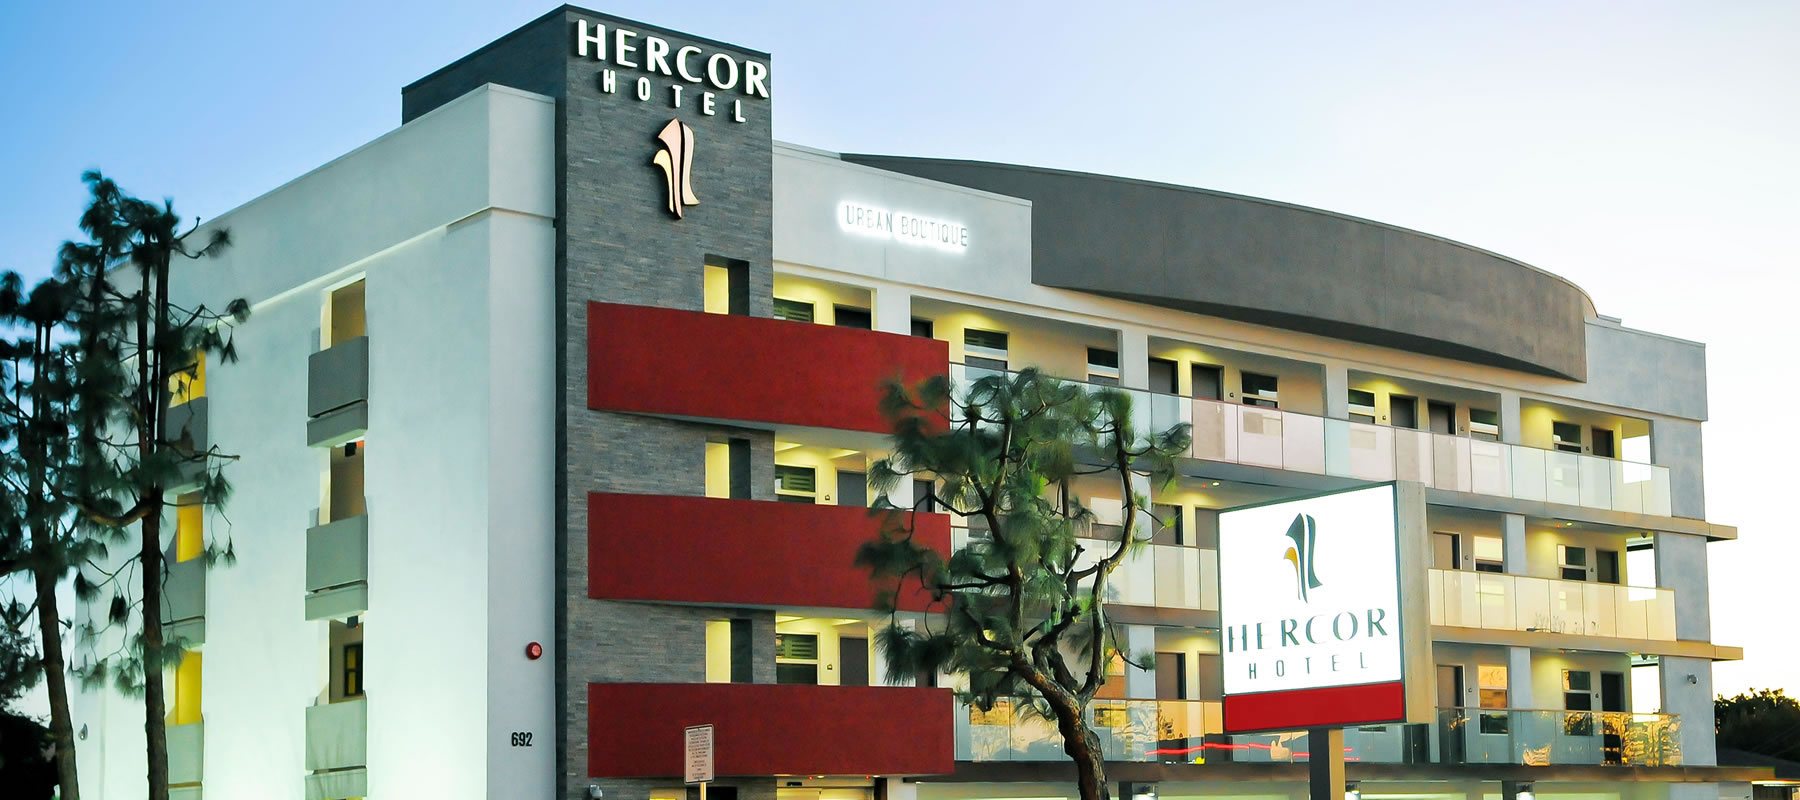 Hotel Hercor San diego